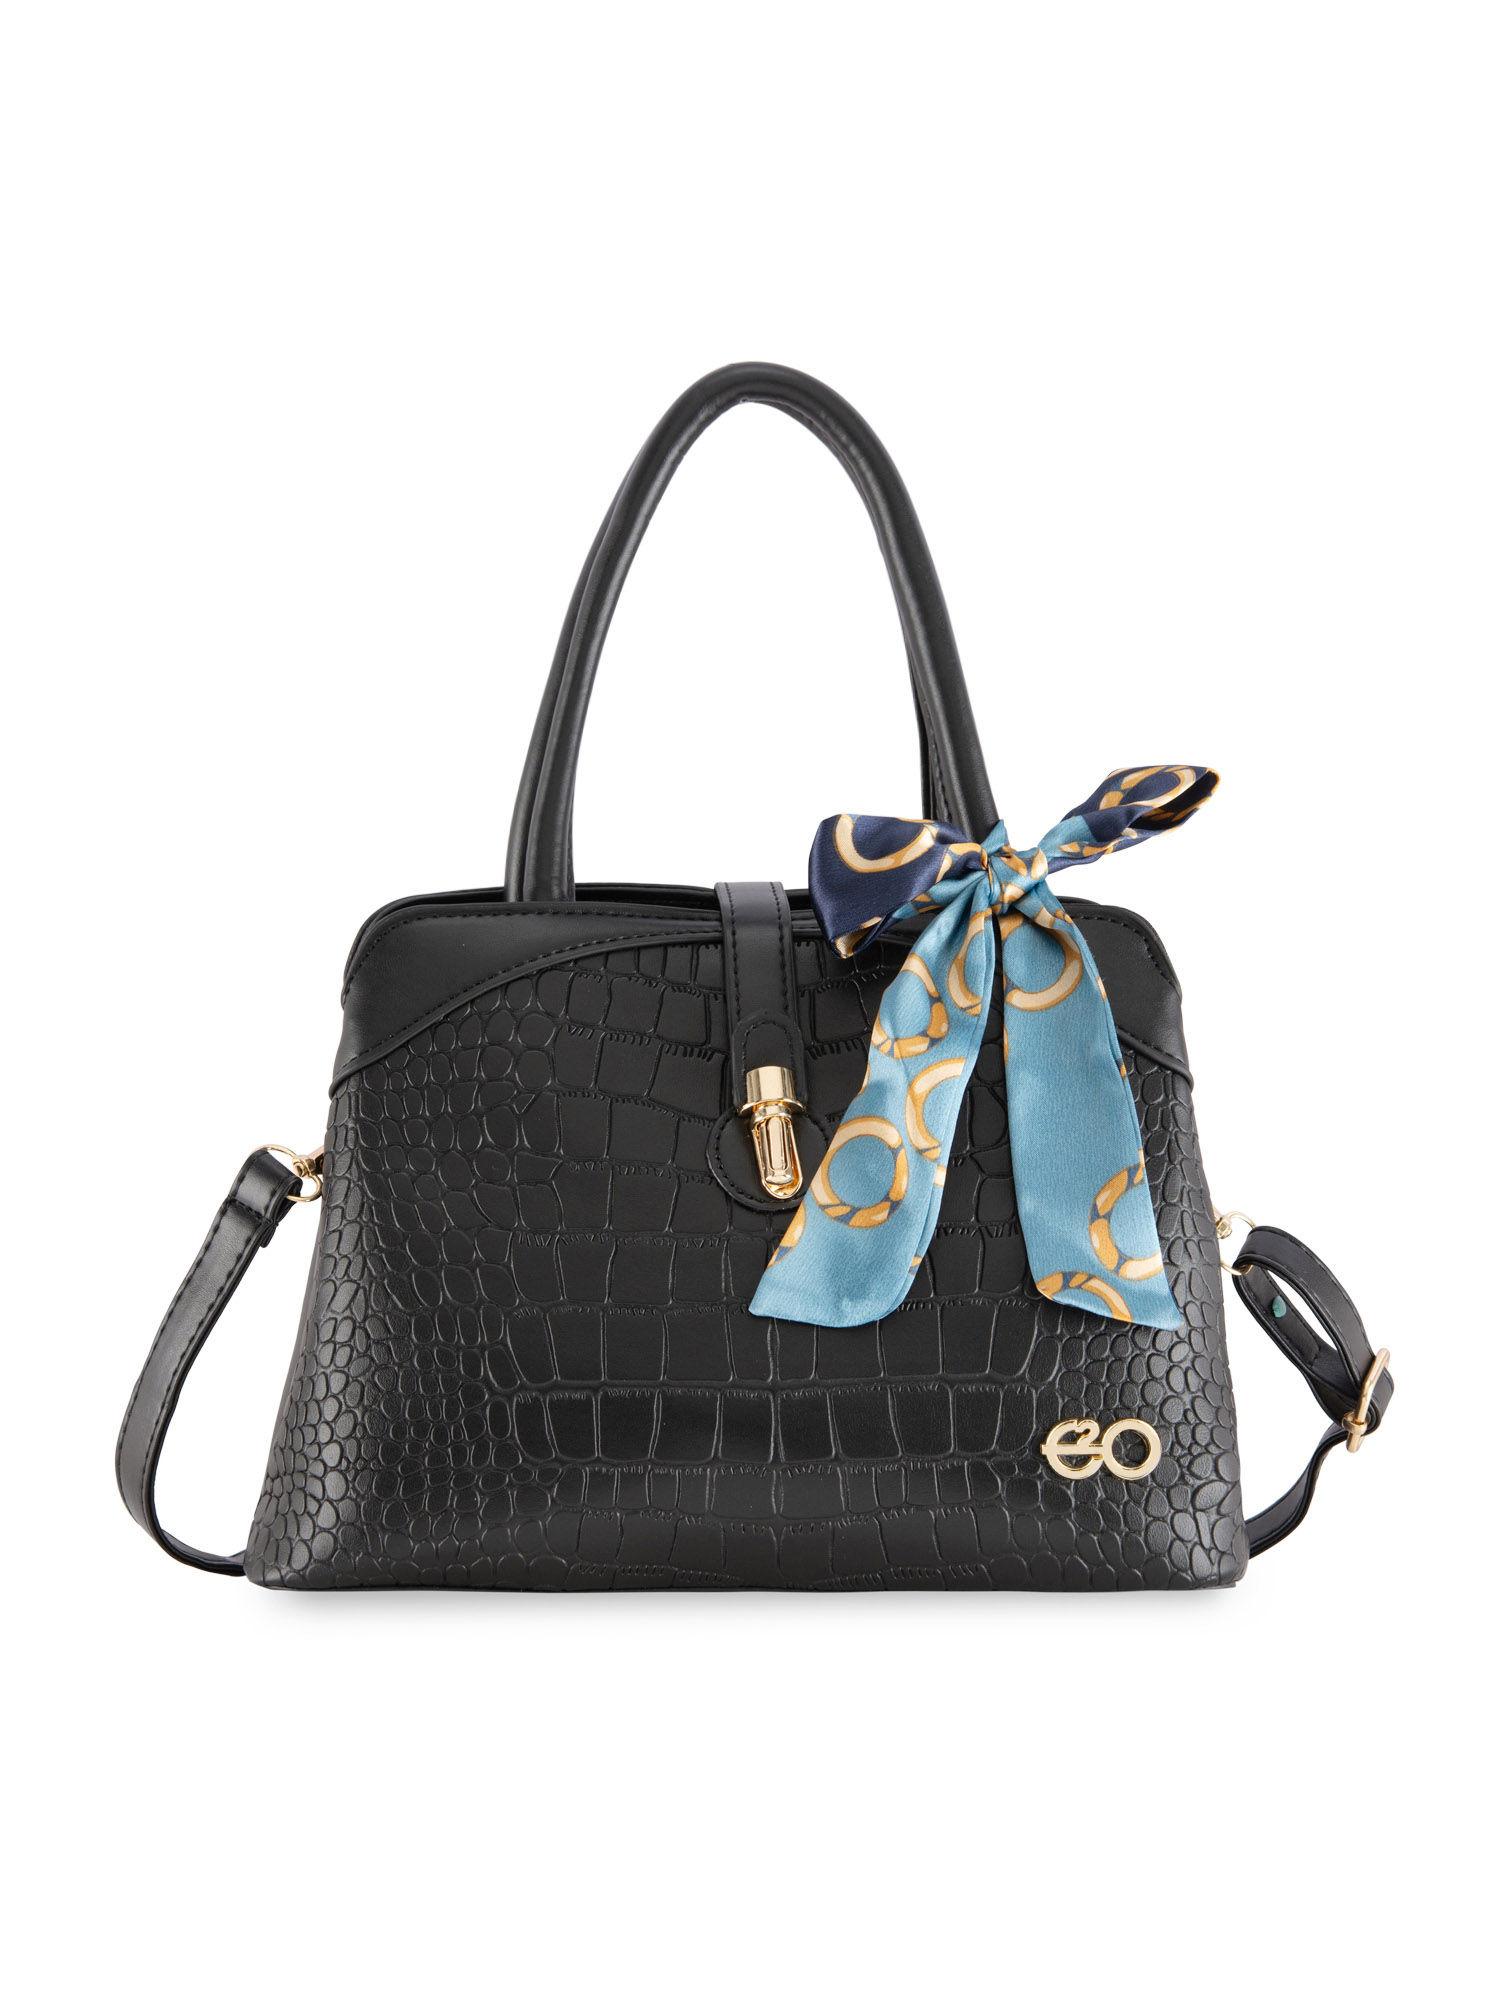 croc structured black satchel handbag for women